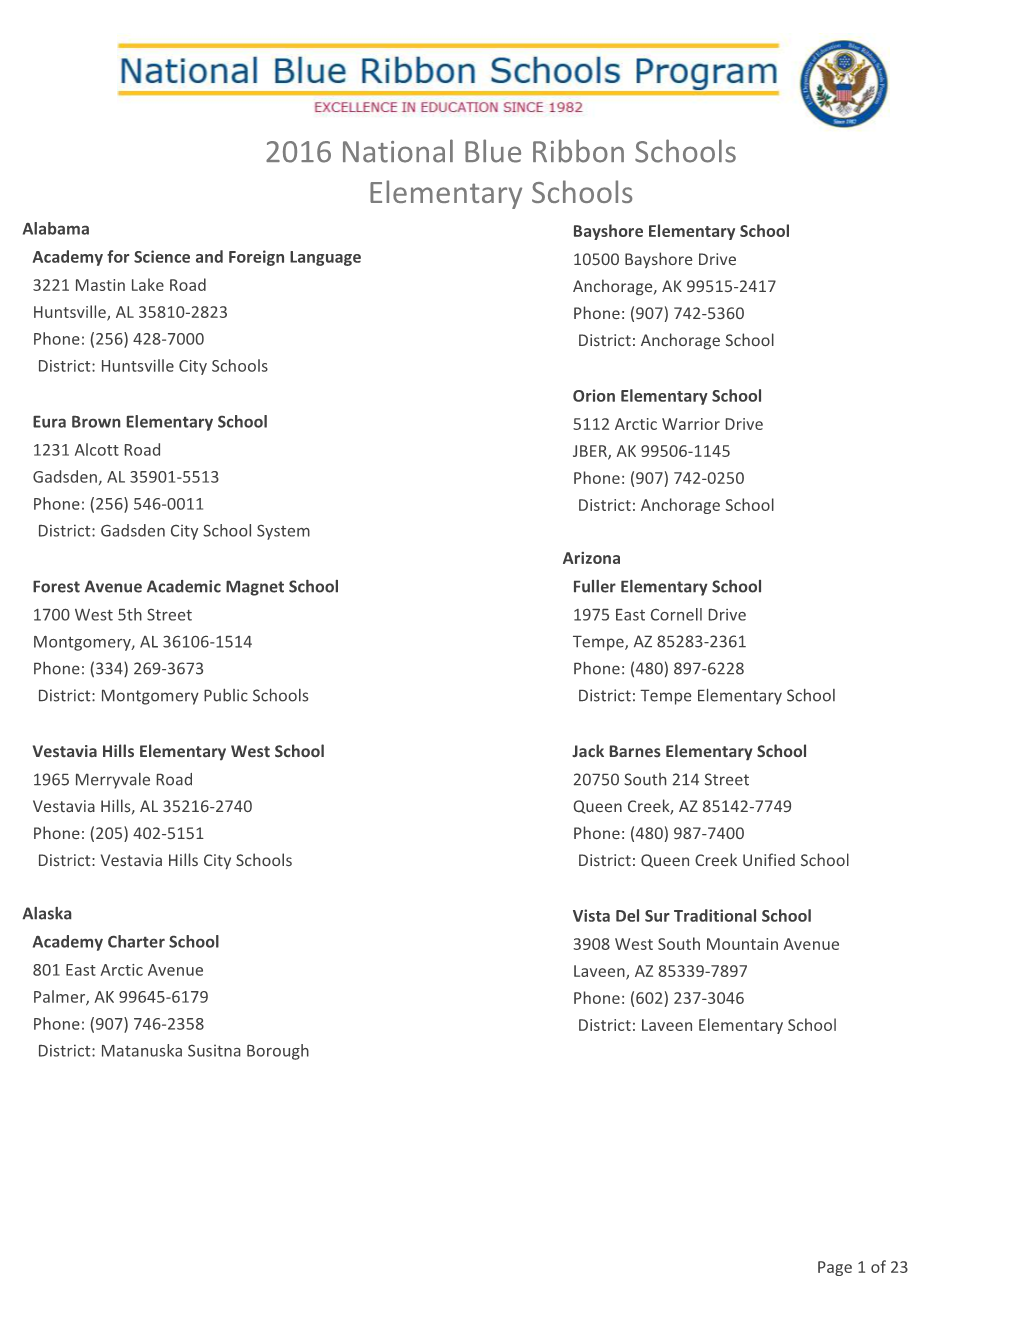 Elementary Schools: 2016 National Blue Ribbon Schools -- November 2018 (PDF)